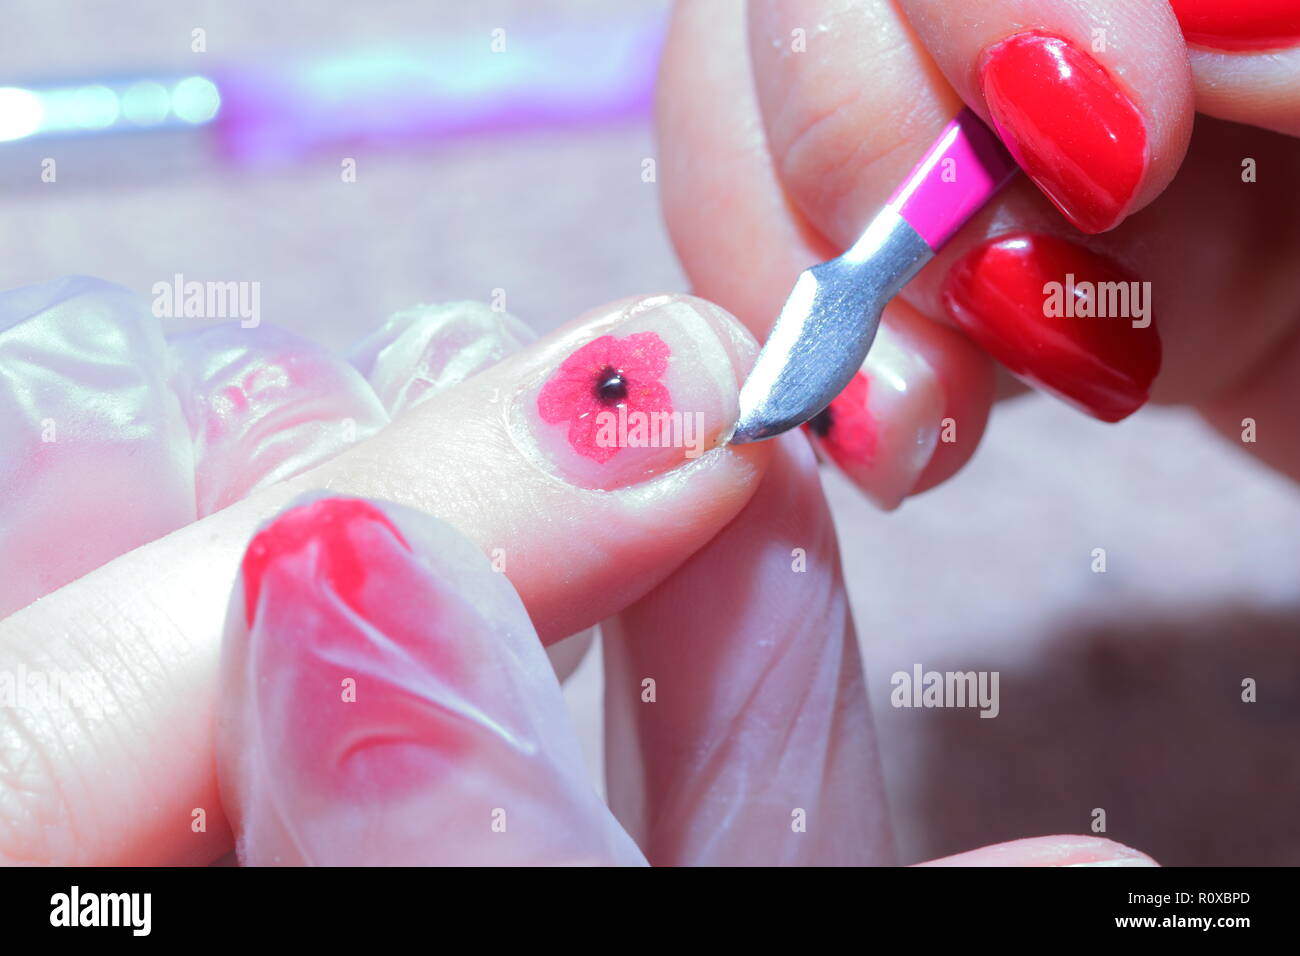 Nail technician applying a tiny poppy to a finger nail to mark remembrance day. Stock Photo